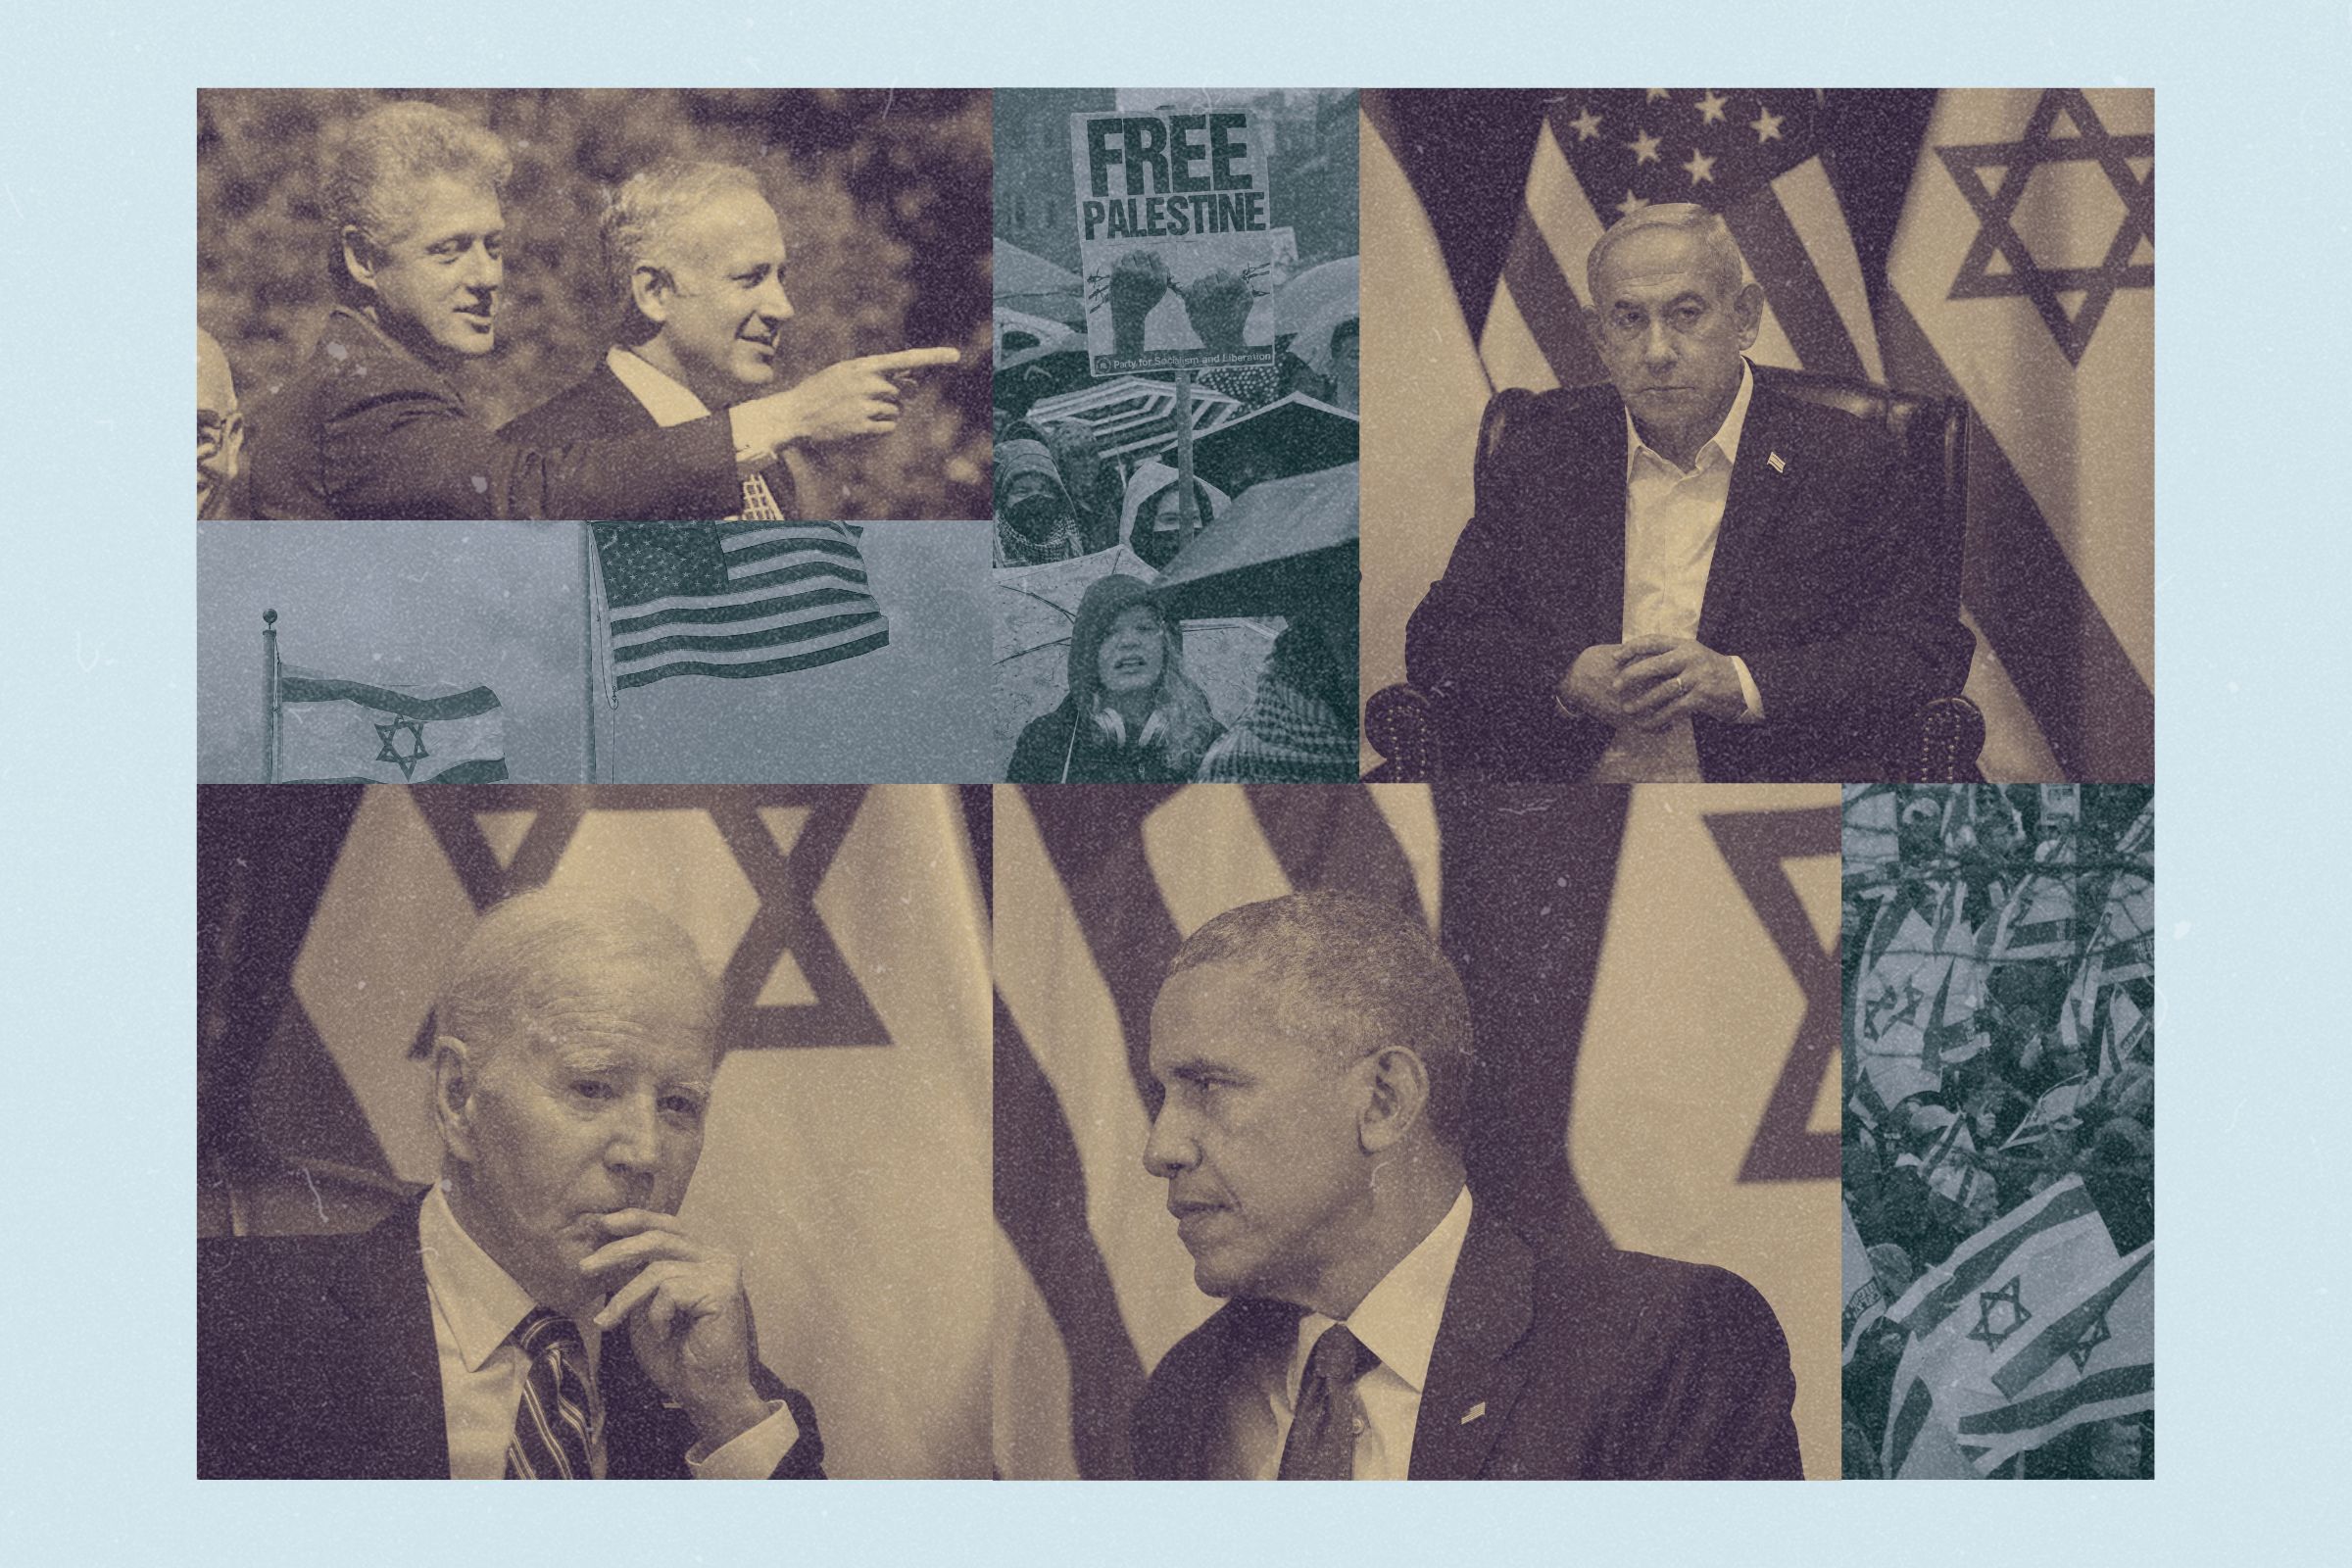 collage including photographs of Bill Clinton, Benjamin Netanyahu, Joe Biden, Barack Obama, and Israel/Palestine related protests